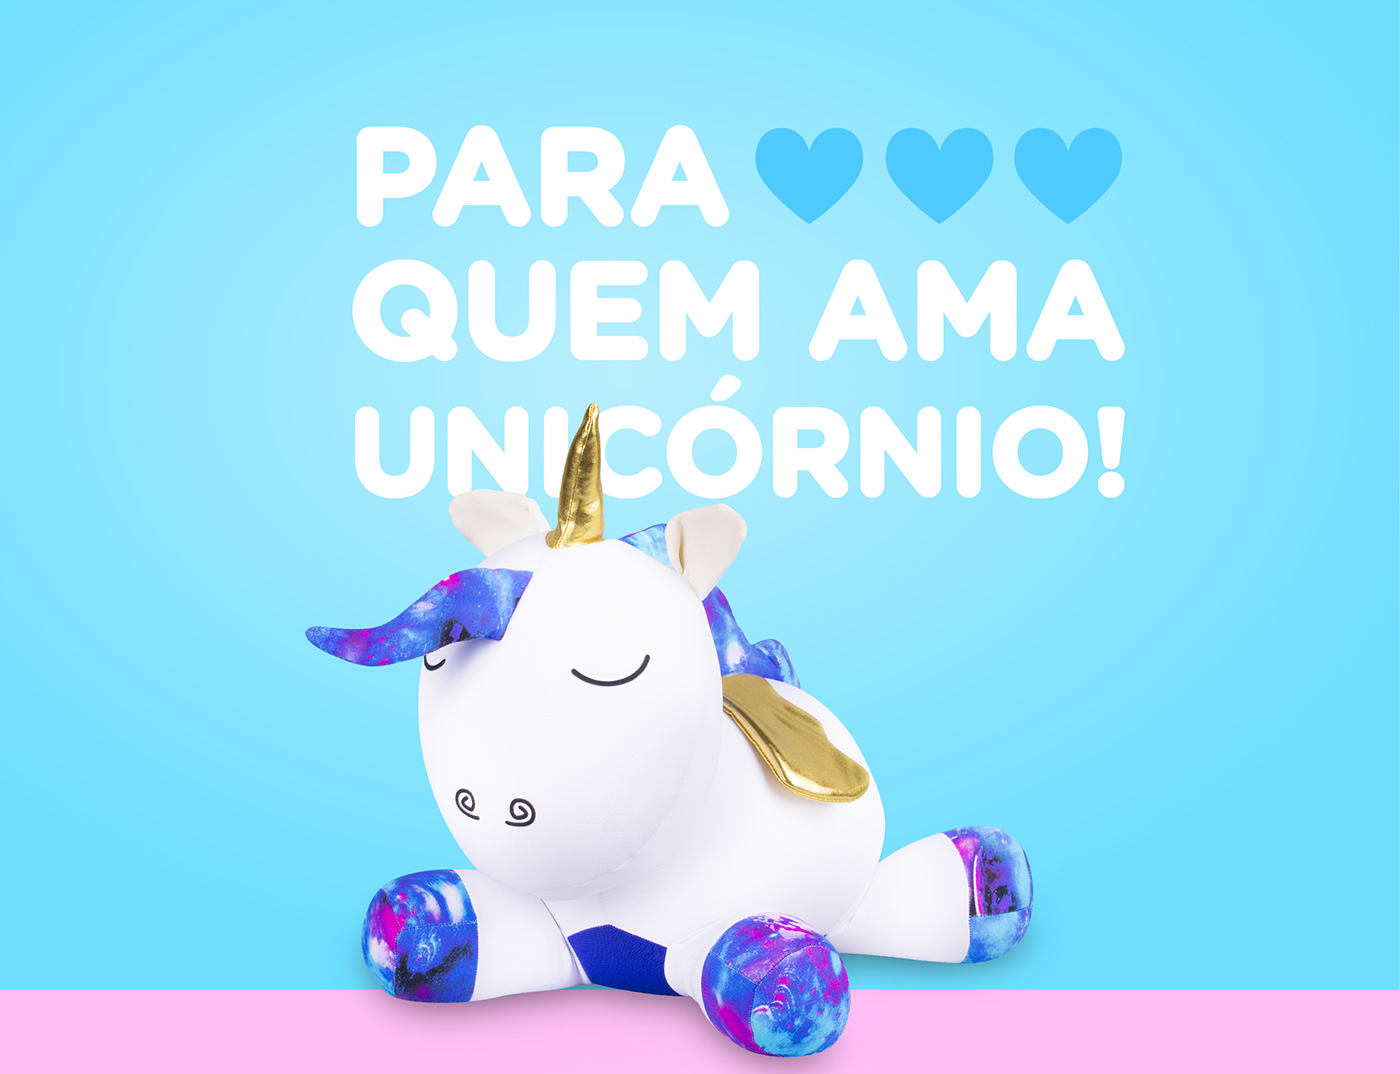 unicorn toy design  product design  Design de brinquedos plush almofada unicornio Fom fofo cute